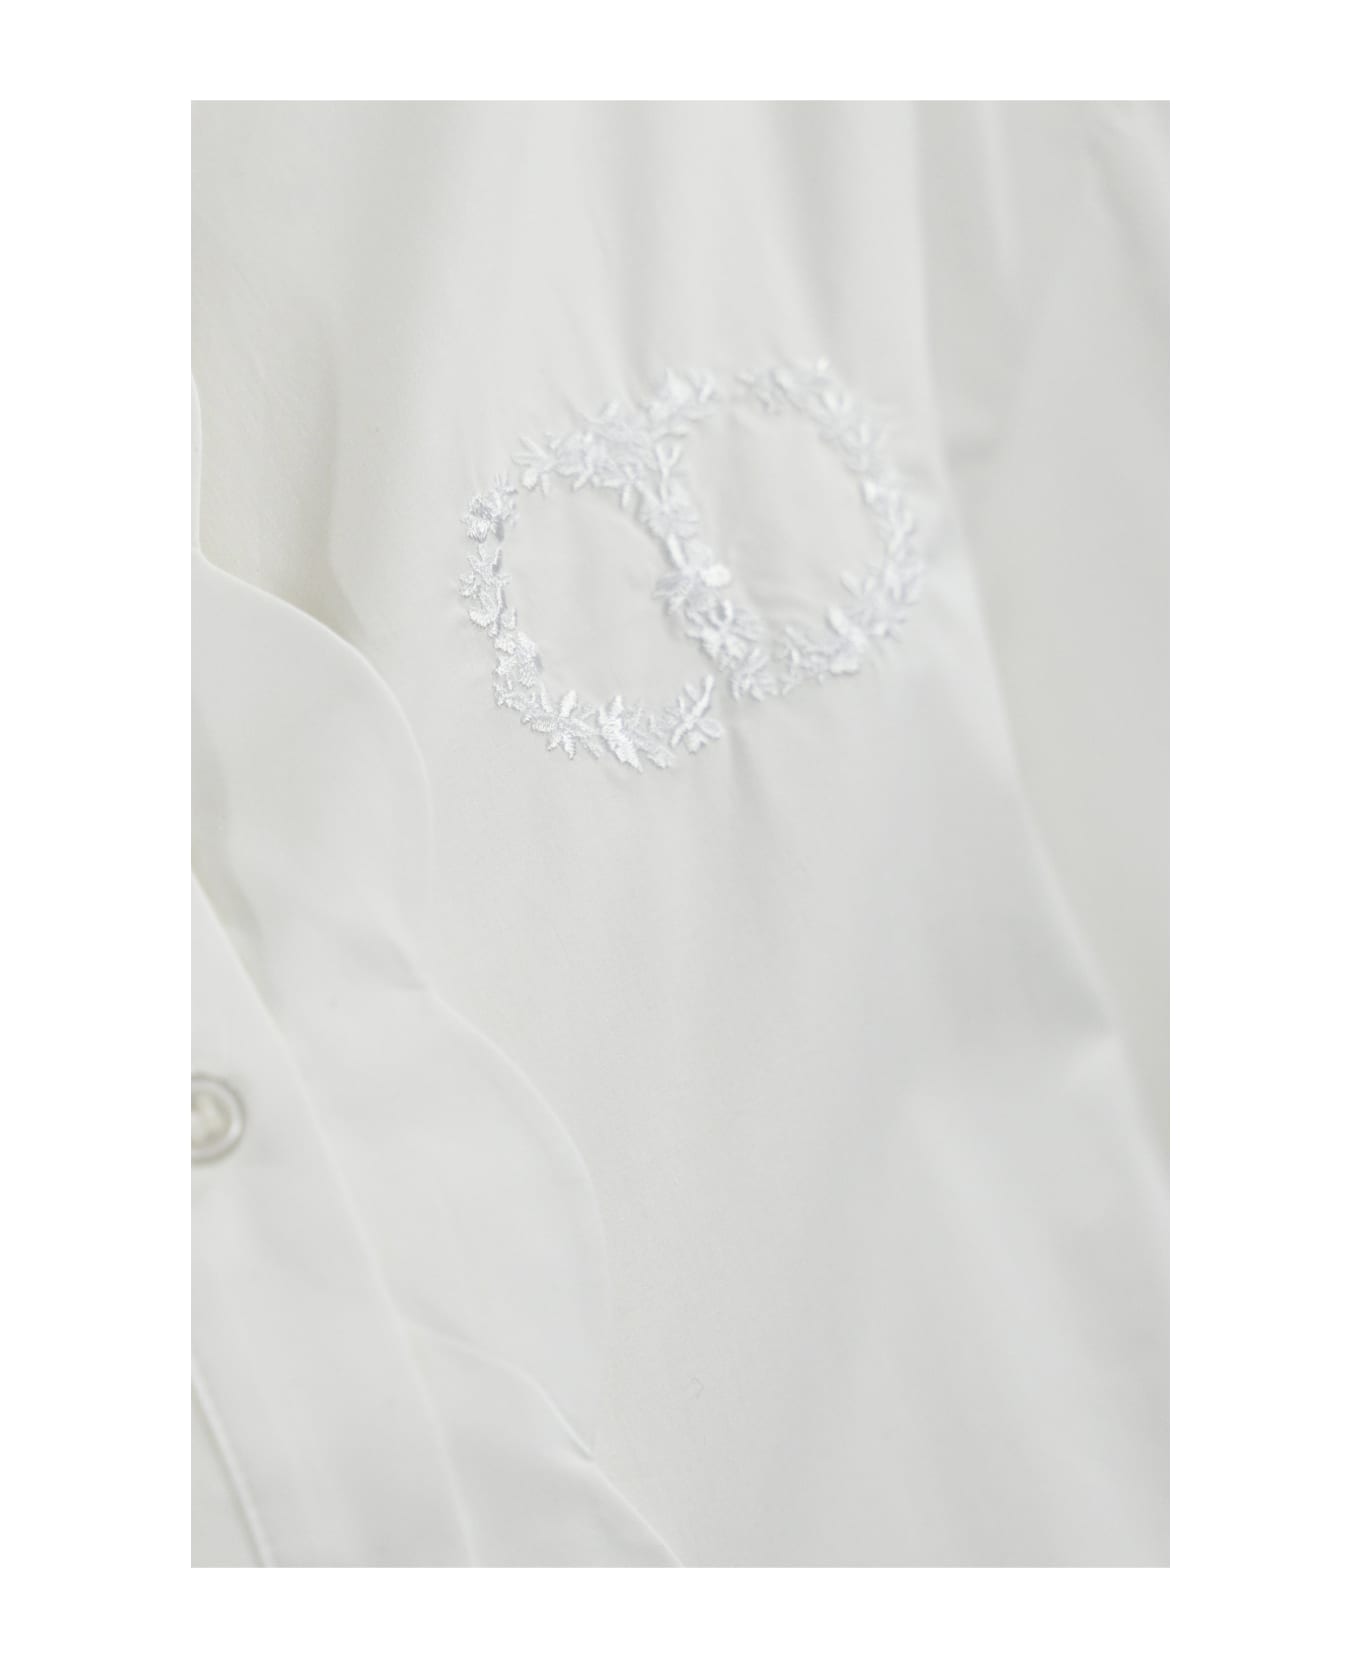 TwinSet Scalloped Poplin Shirt - Bianco シャツ